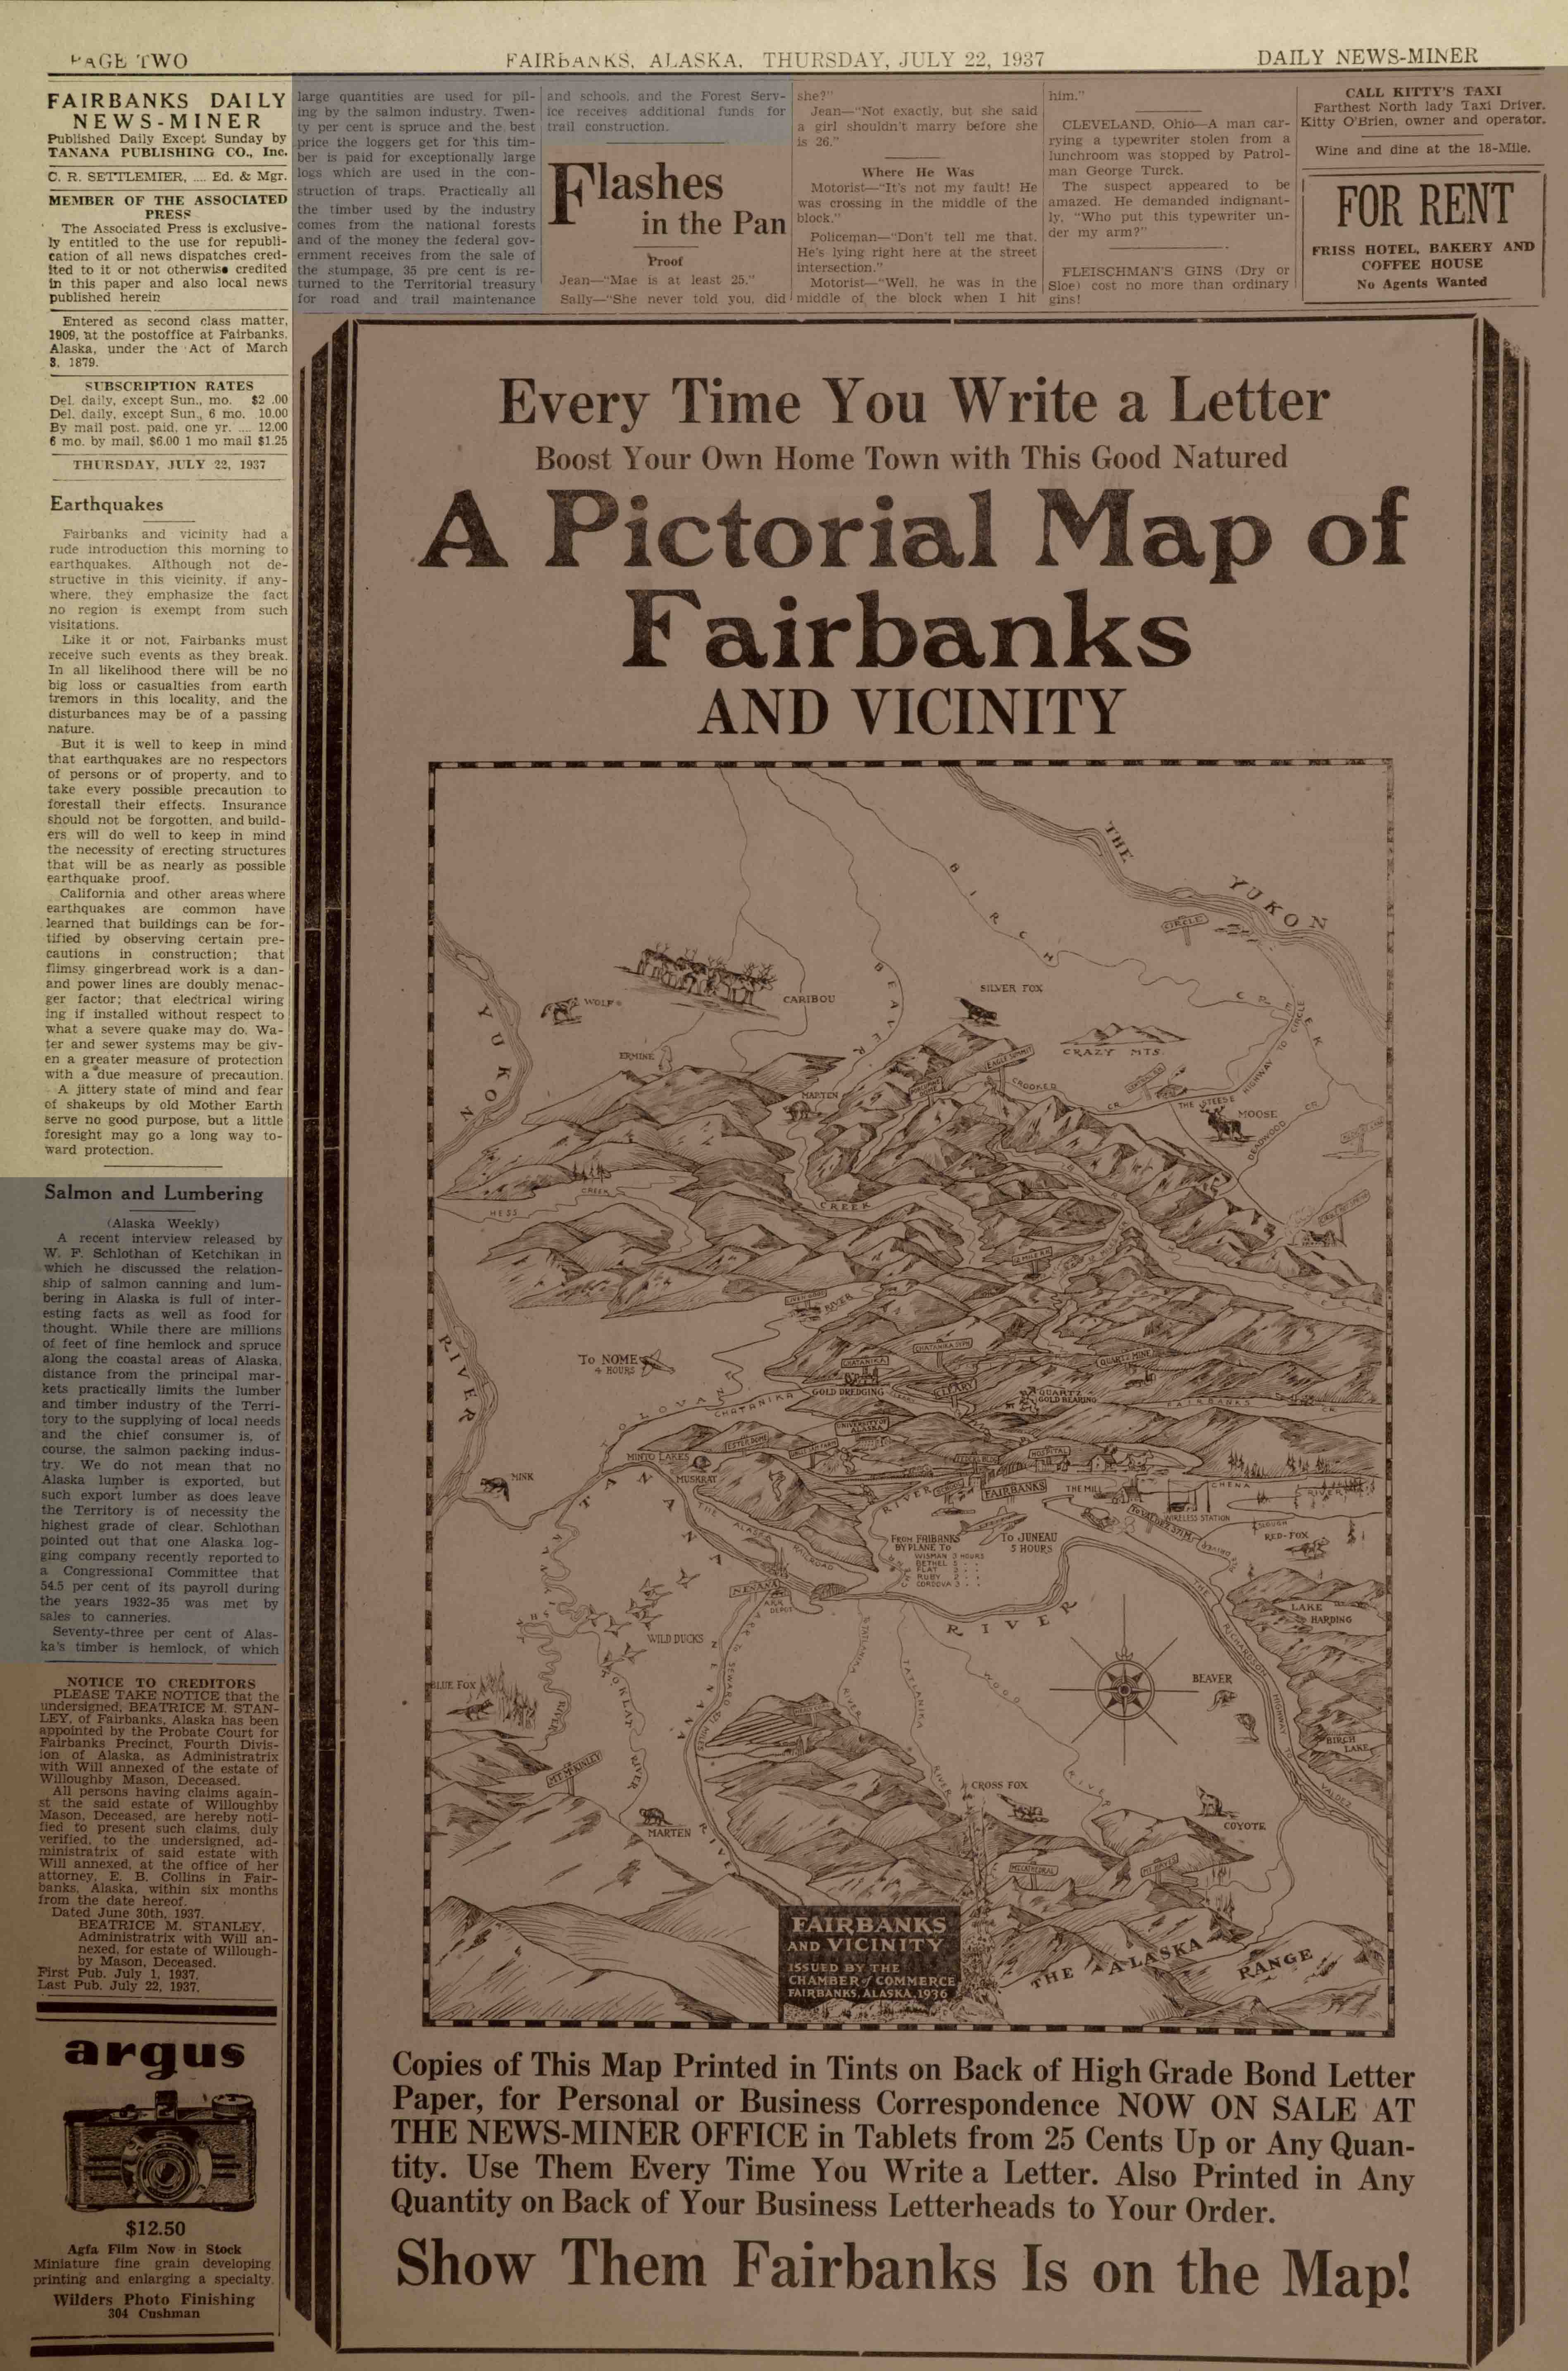 1937 July 22, Fairbanks Daily News-Miner (pg 2)